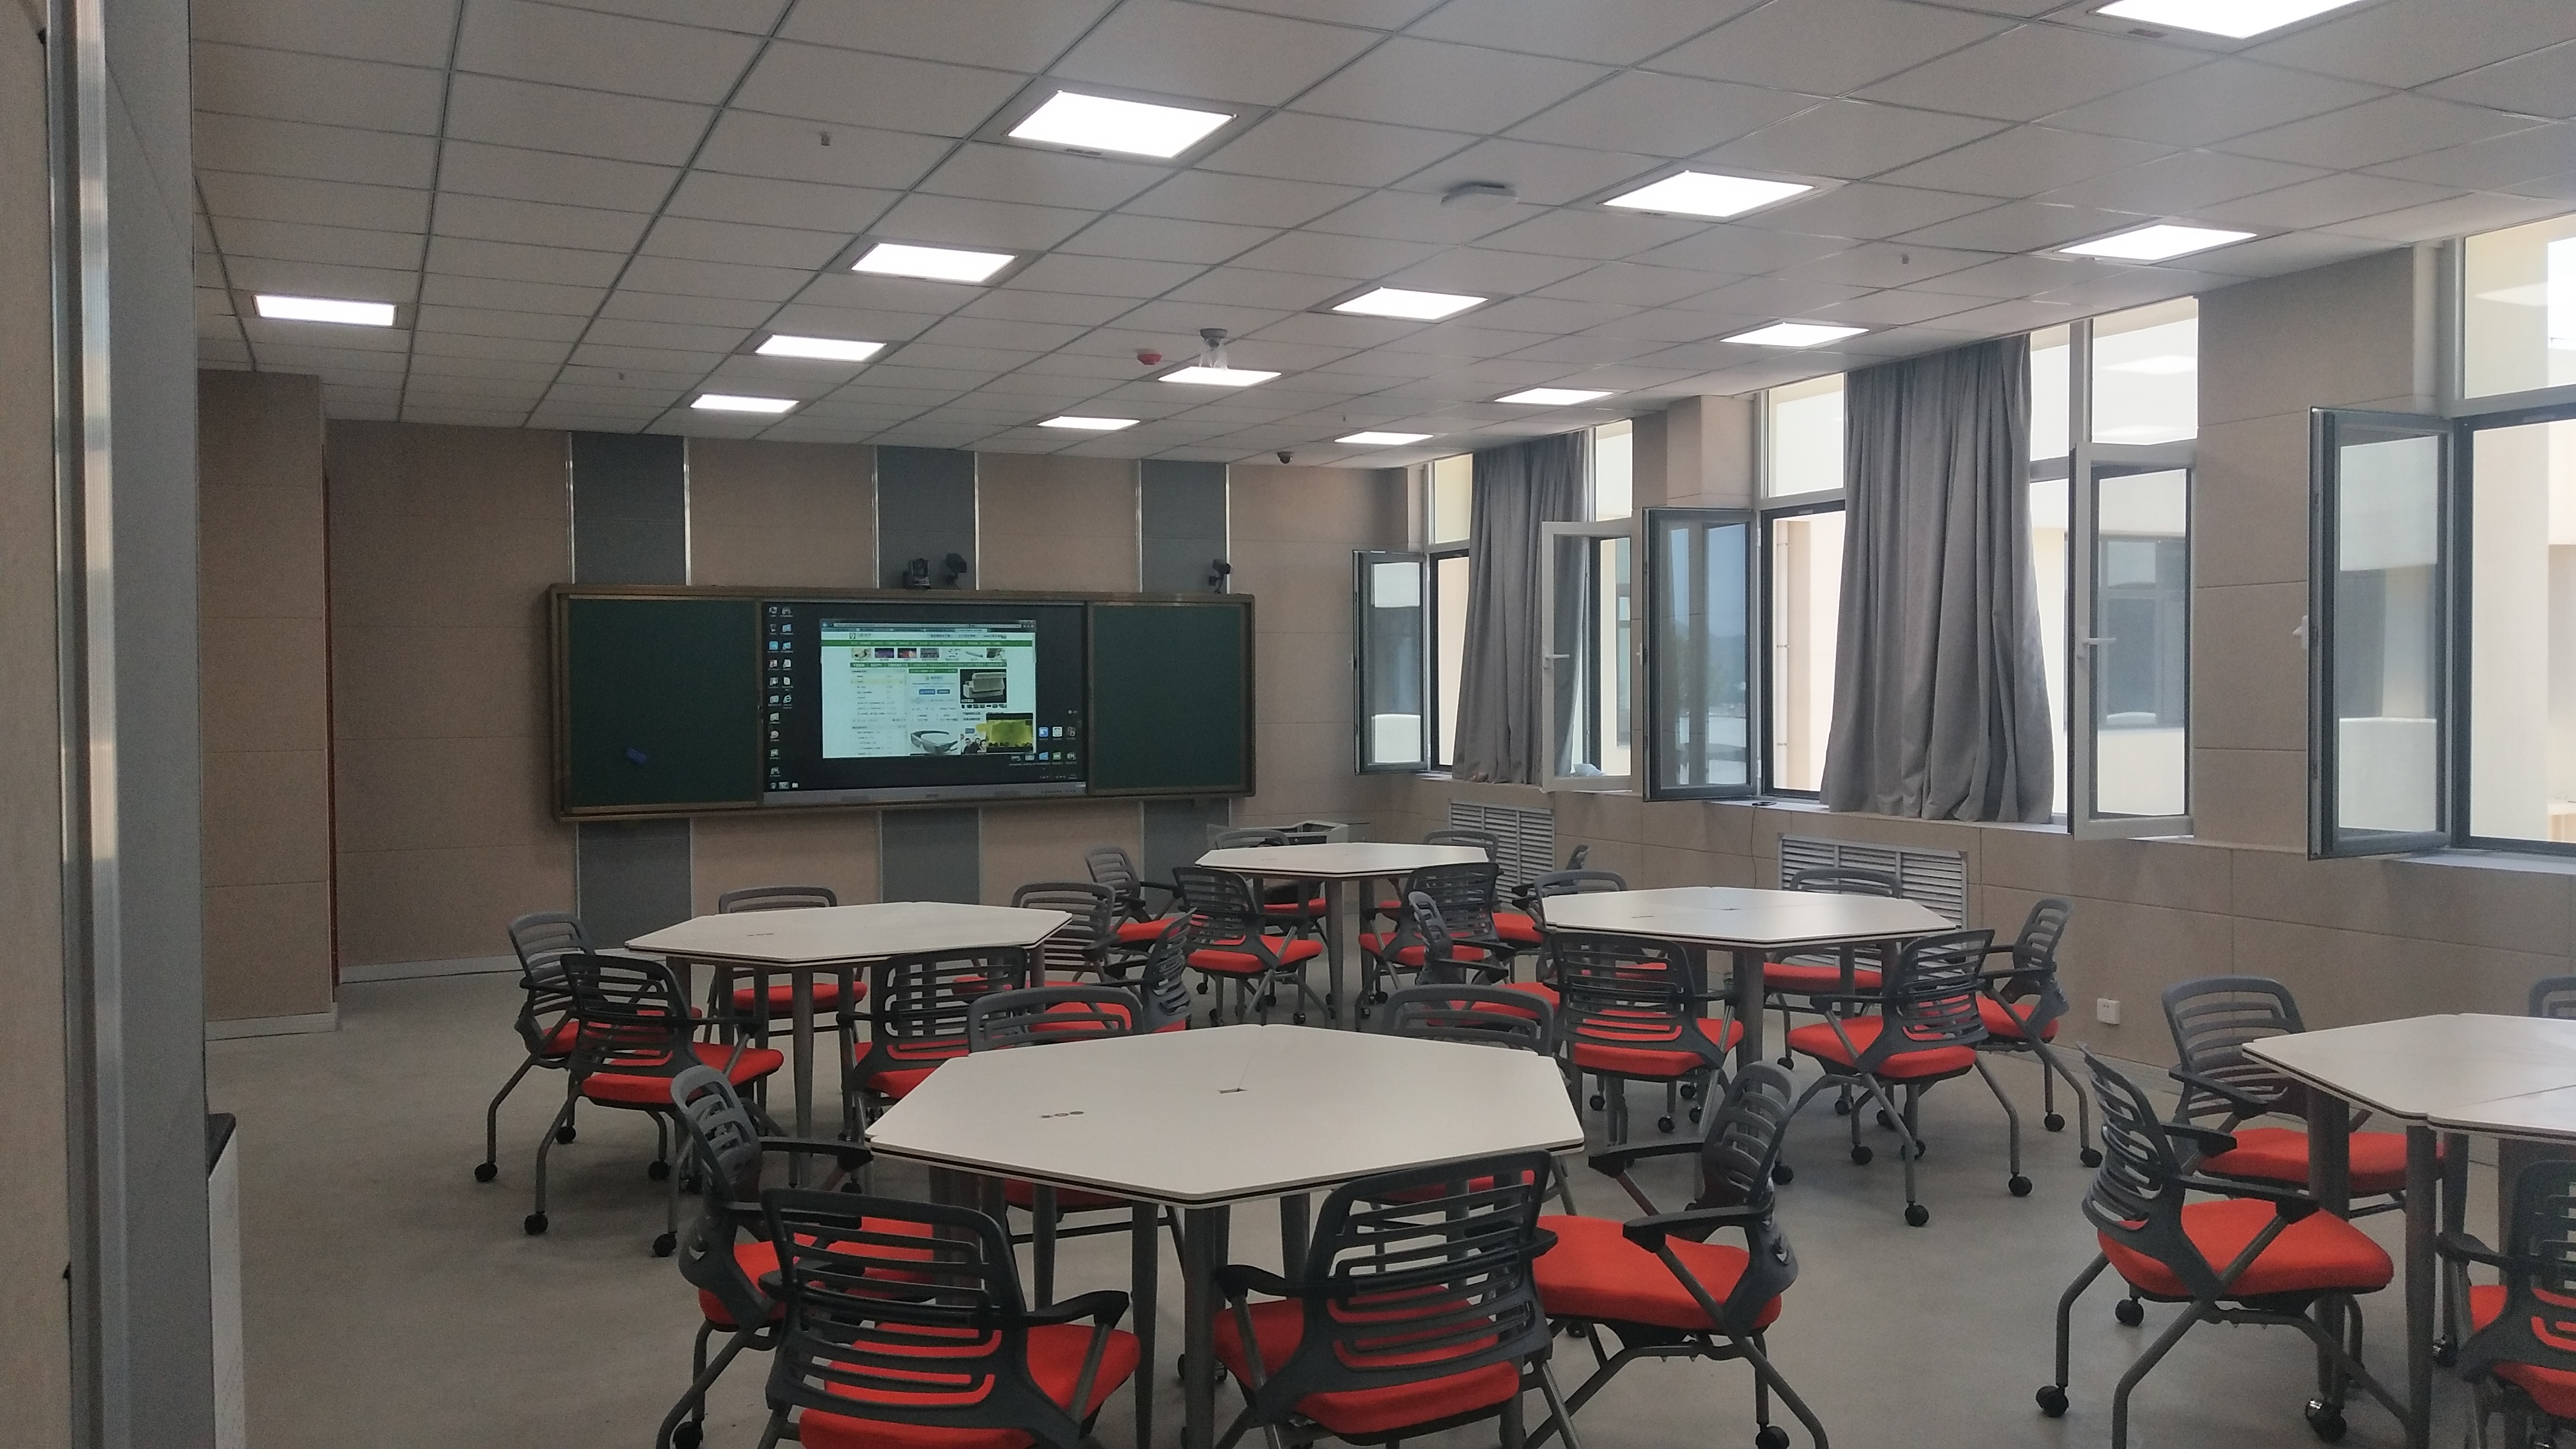 Smart classroom Lighting and Acoustic De